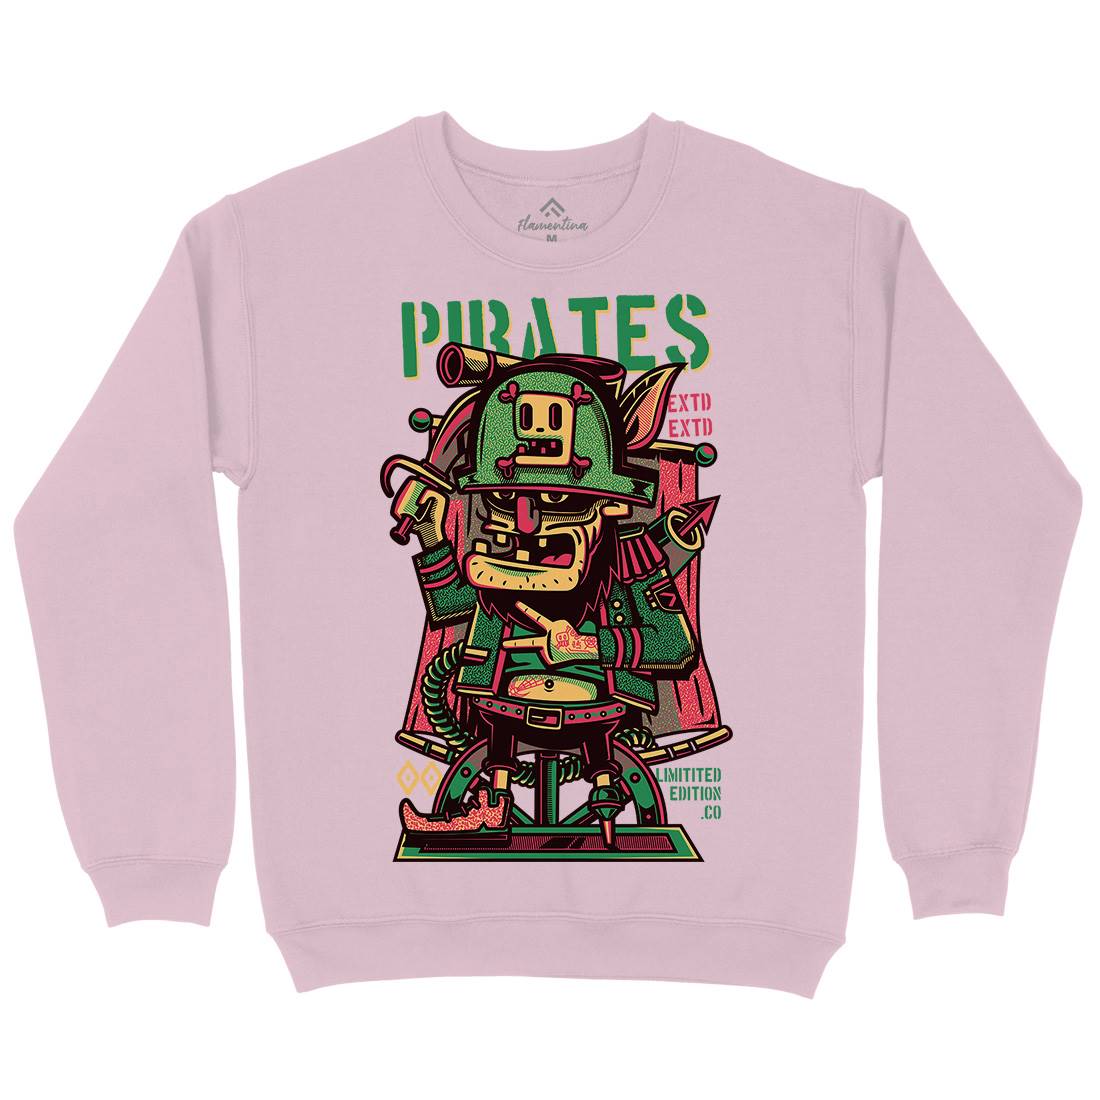 Pirates Kids Crew Neck Sweatshirt Navy D678